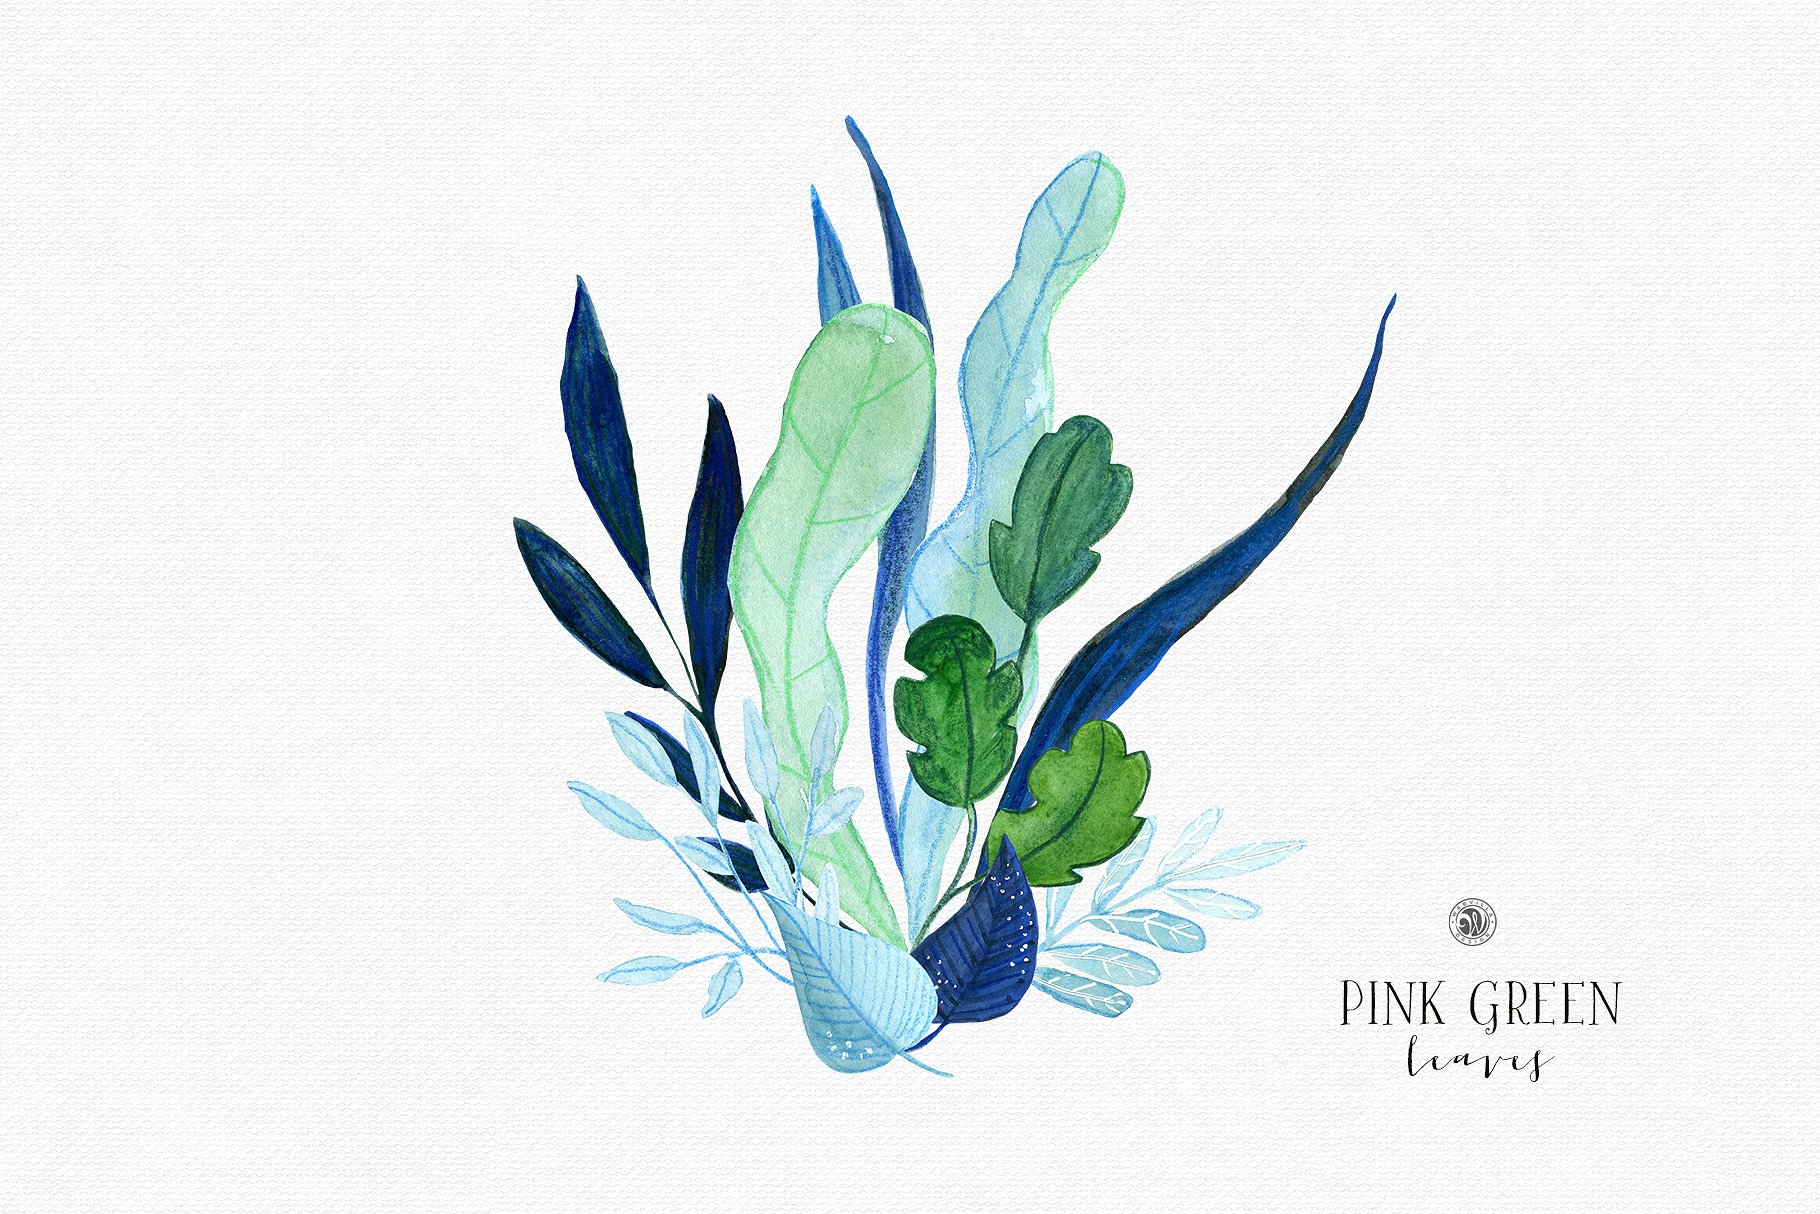 水彩手绘粉绿色叶子插画合集 Pink Green Leaves插图2